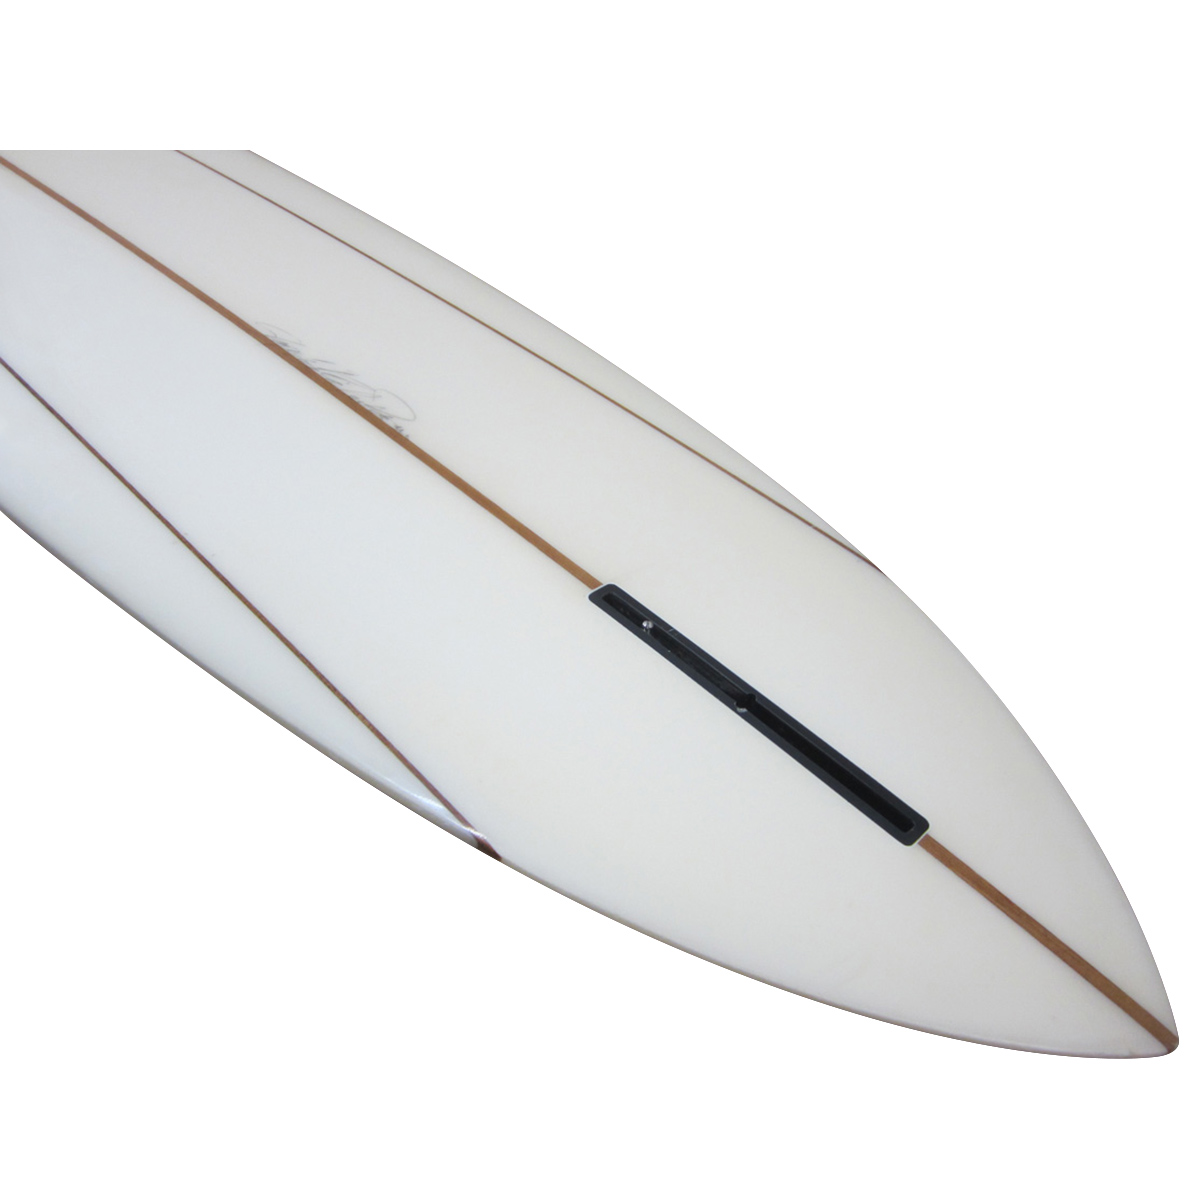 DEGAWA SURFBOARDS / Eagle 10`6